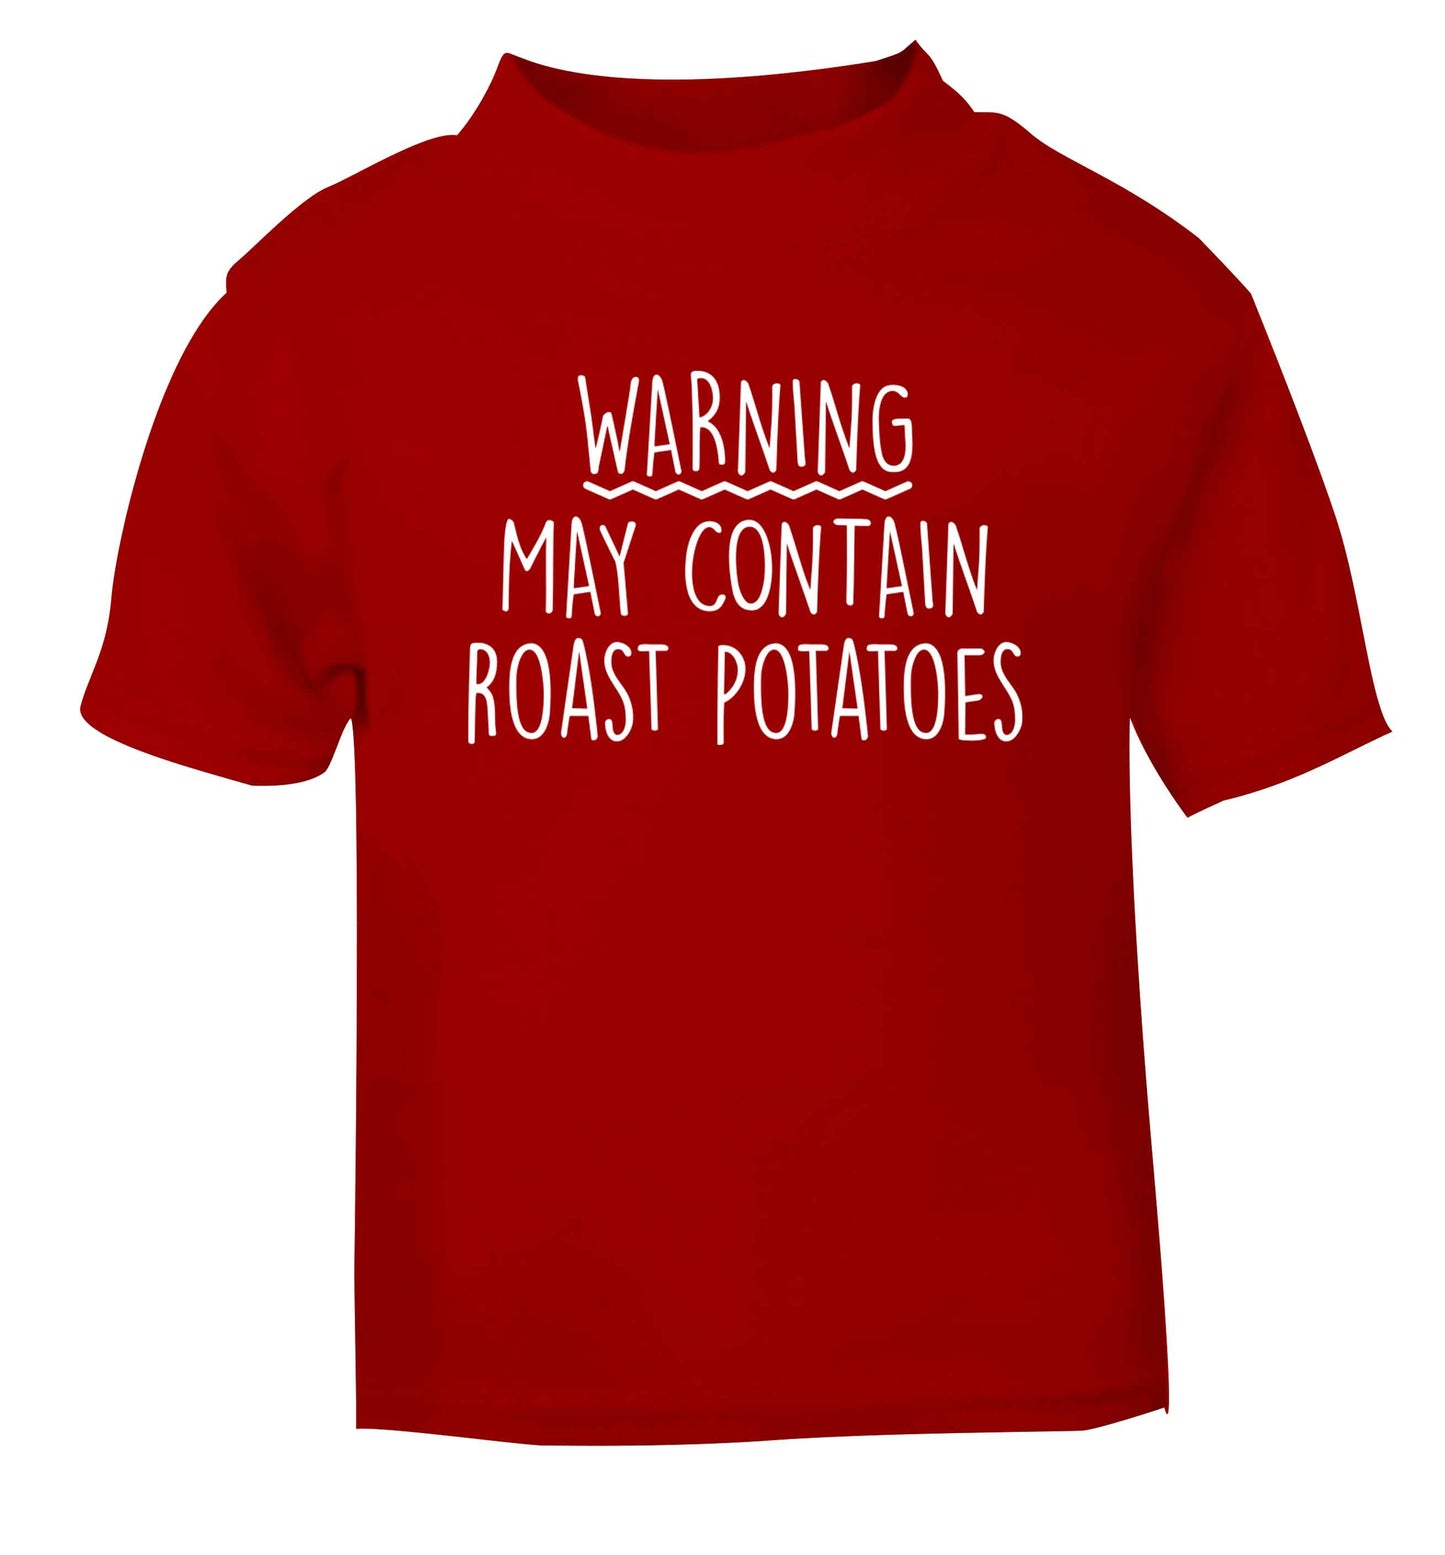 Warning may containg roast potatoes red baby toddler Tshirt 2 Years